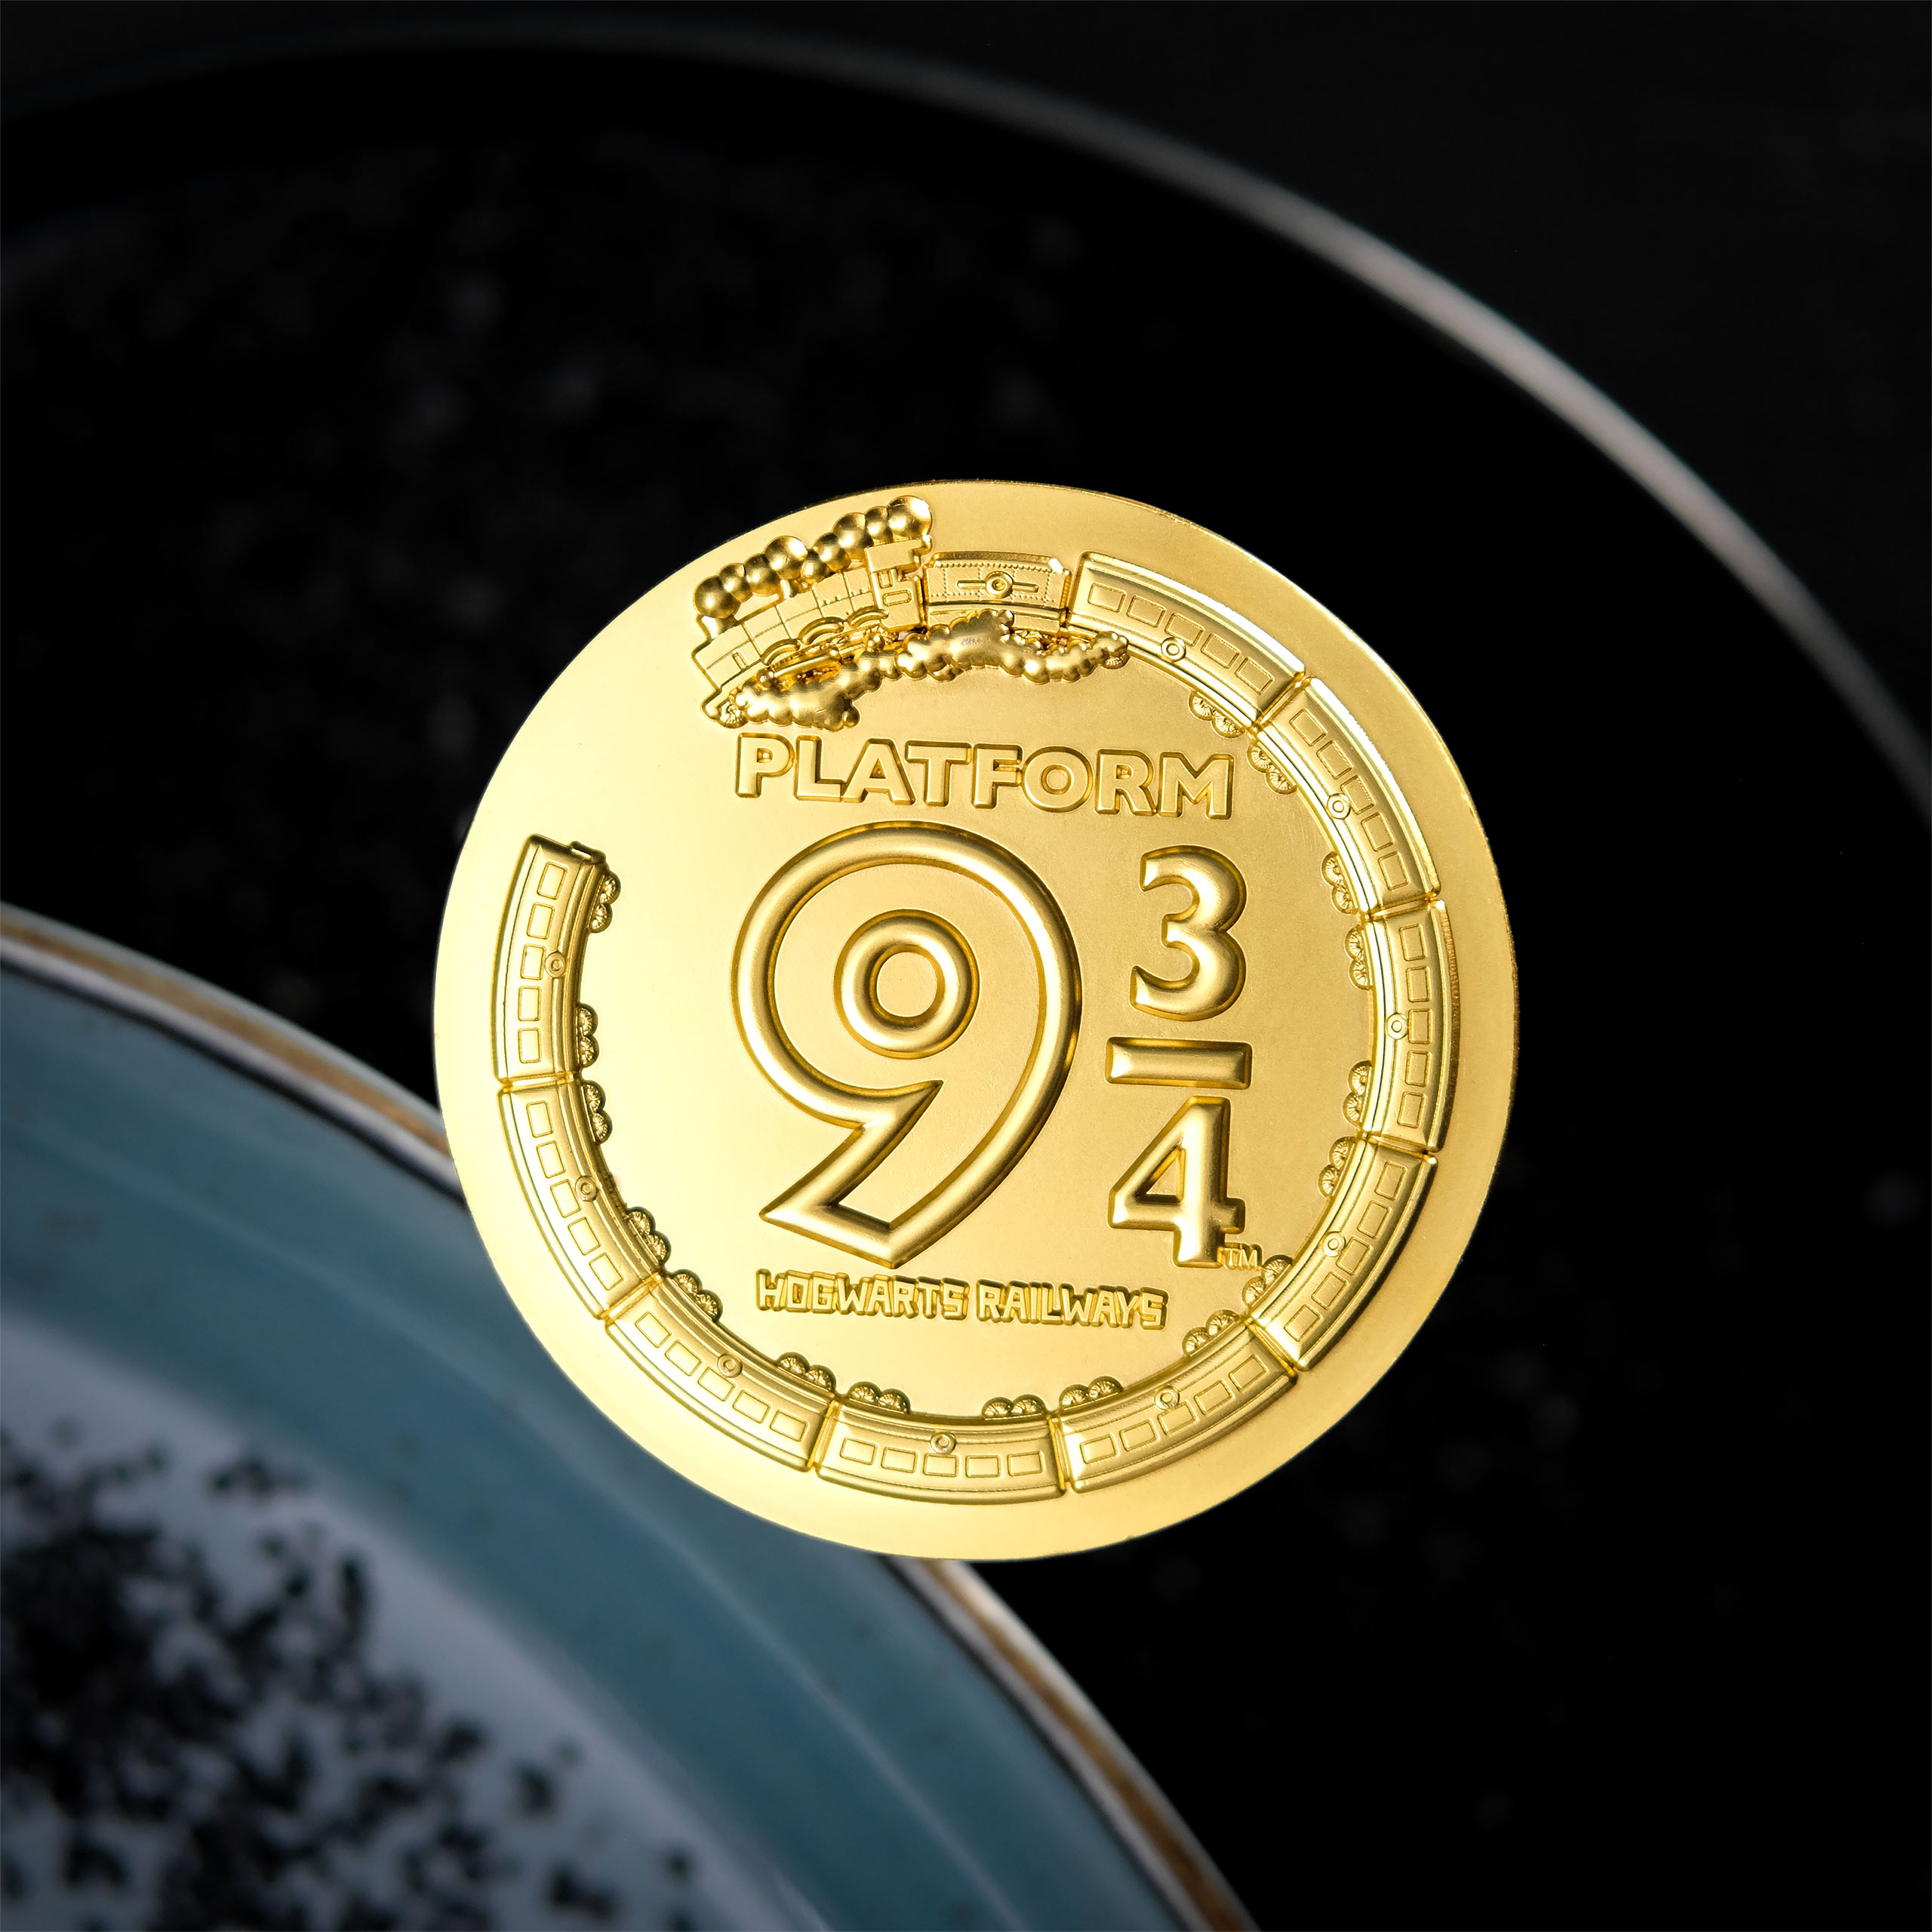 Harry Potter - 9 3/4 Hogwarts Express Medallion